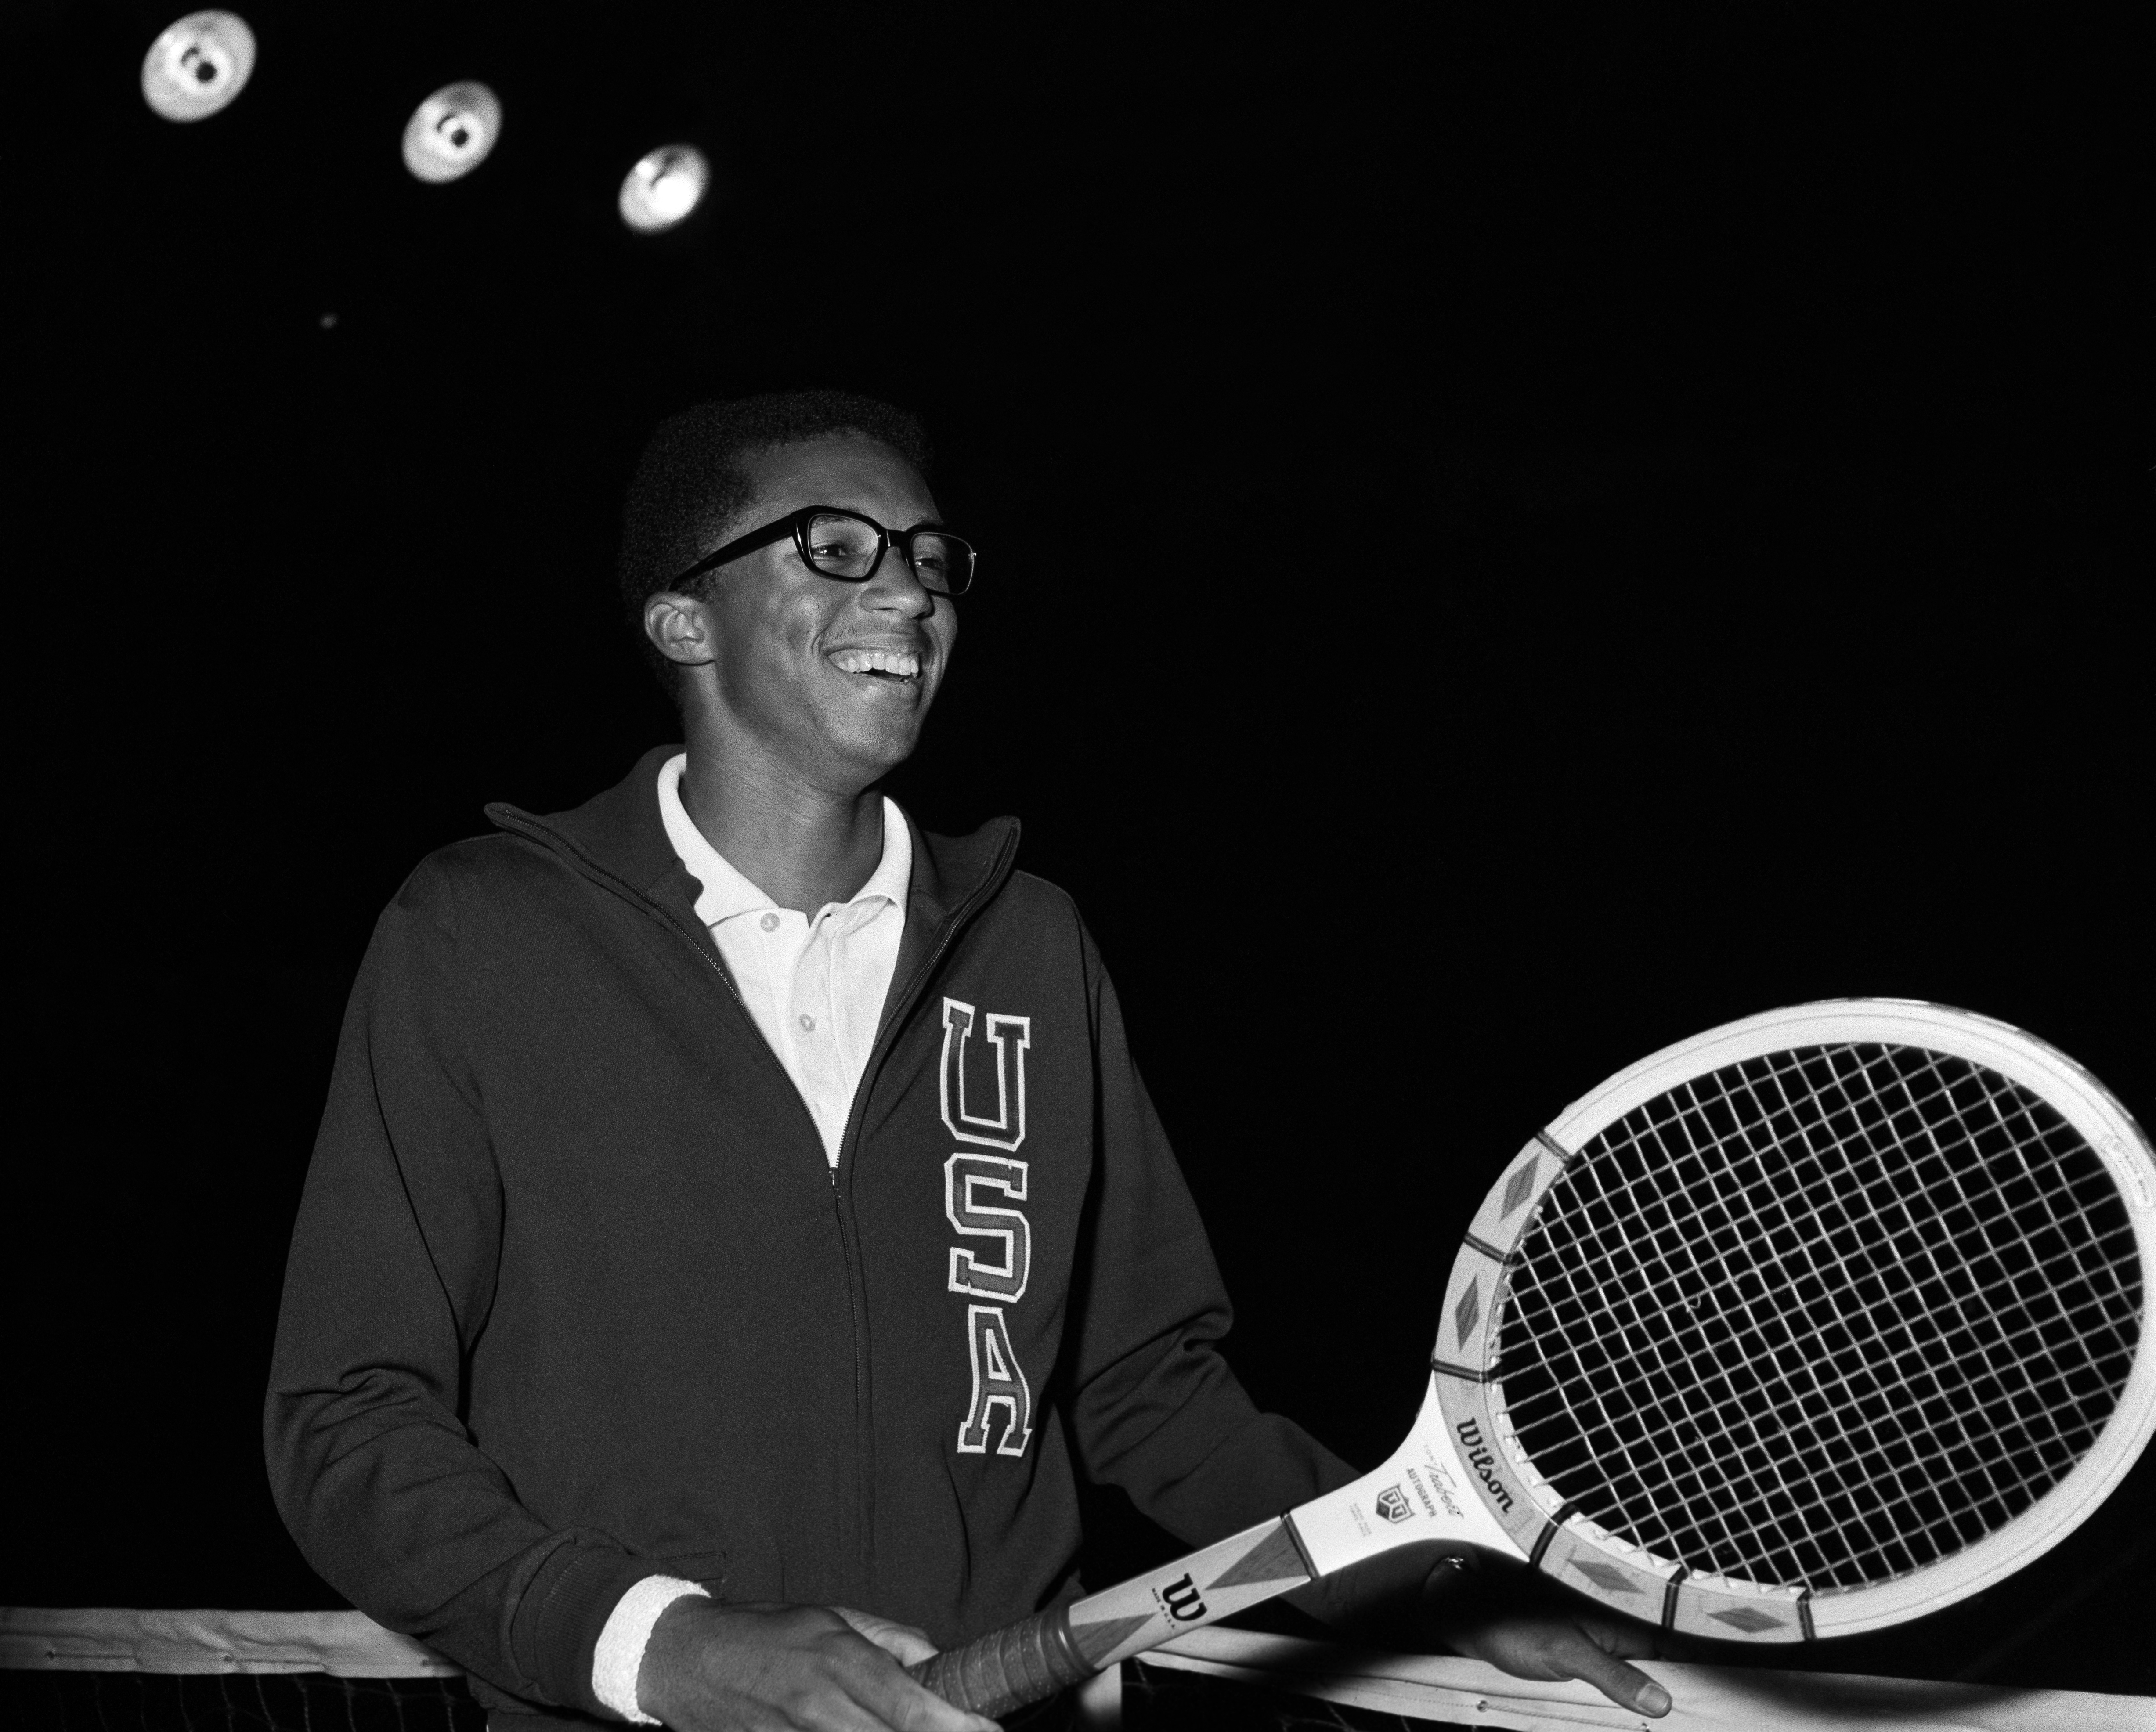 Tennis player Arthur Ashe